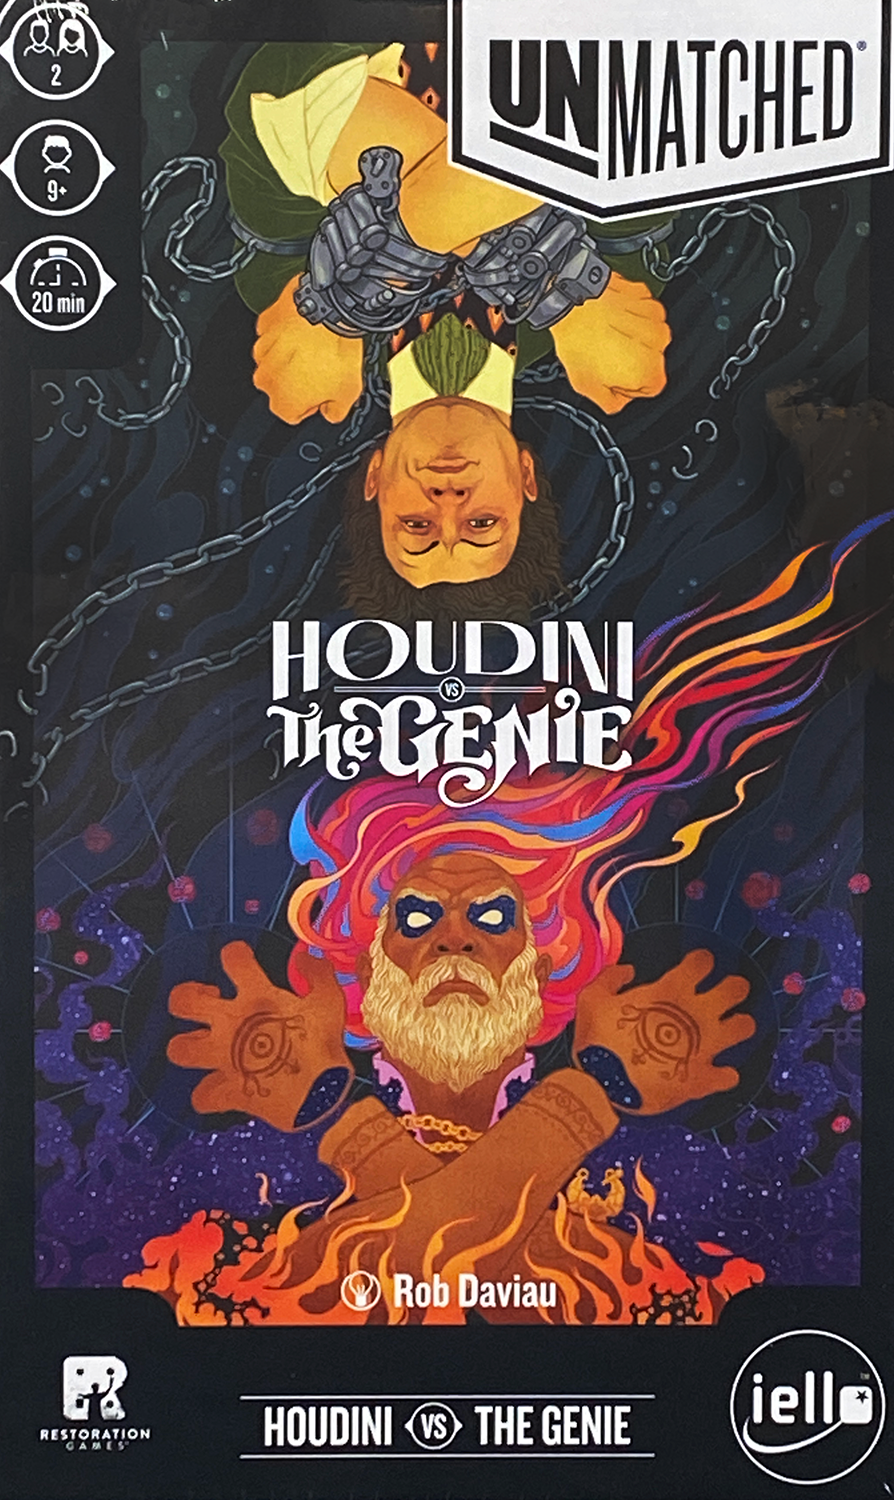 Unmatched Houdini vs The Genie